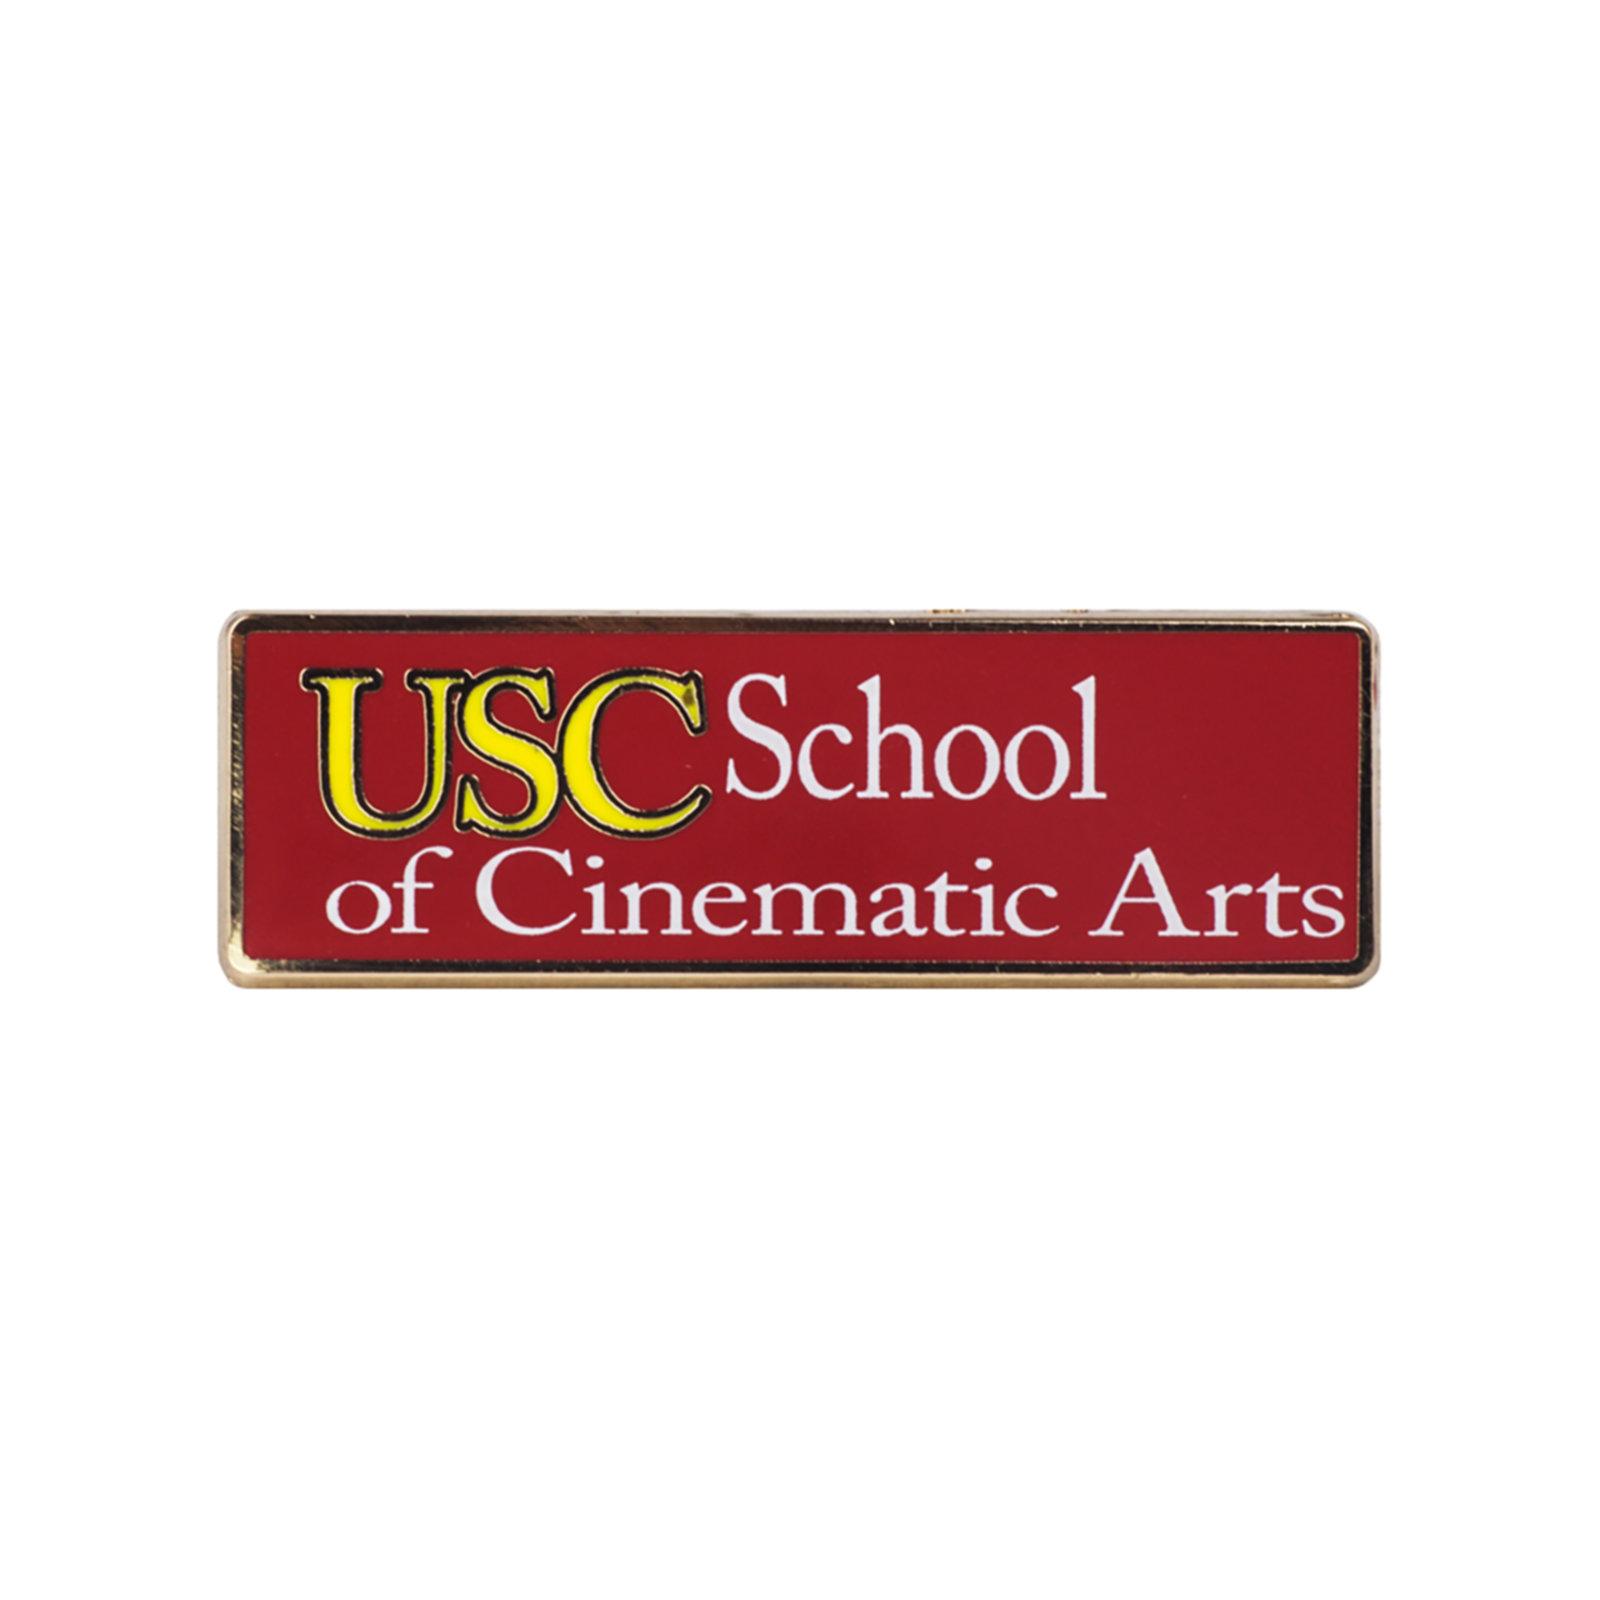 USC Cardinal SCHOOL OF CINEMATIC ARTS PIN BY PIN USA image01